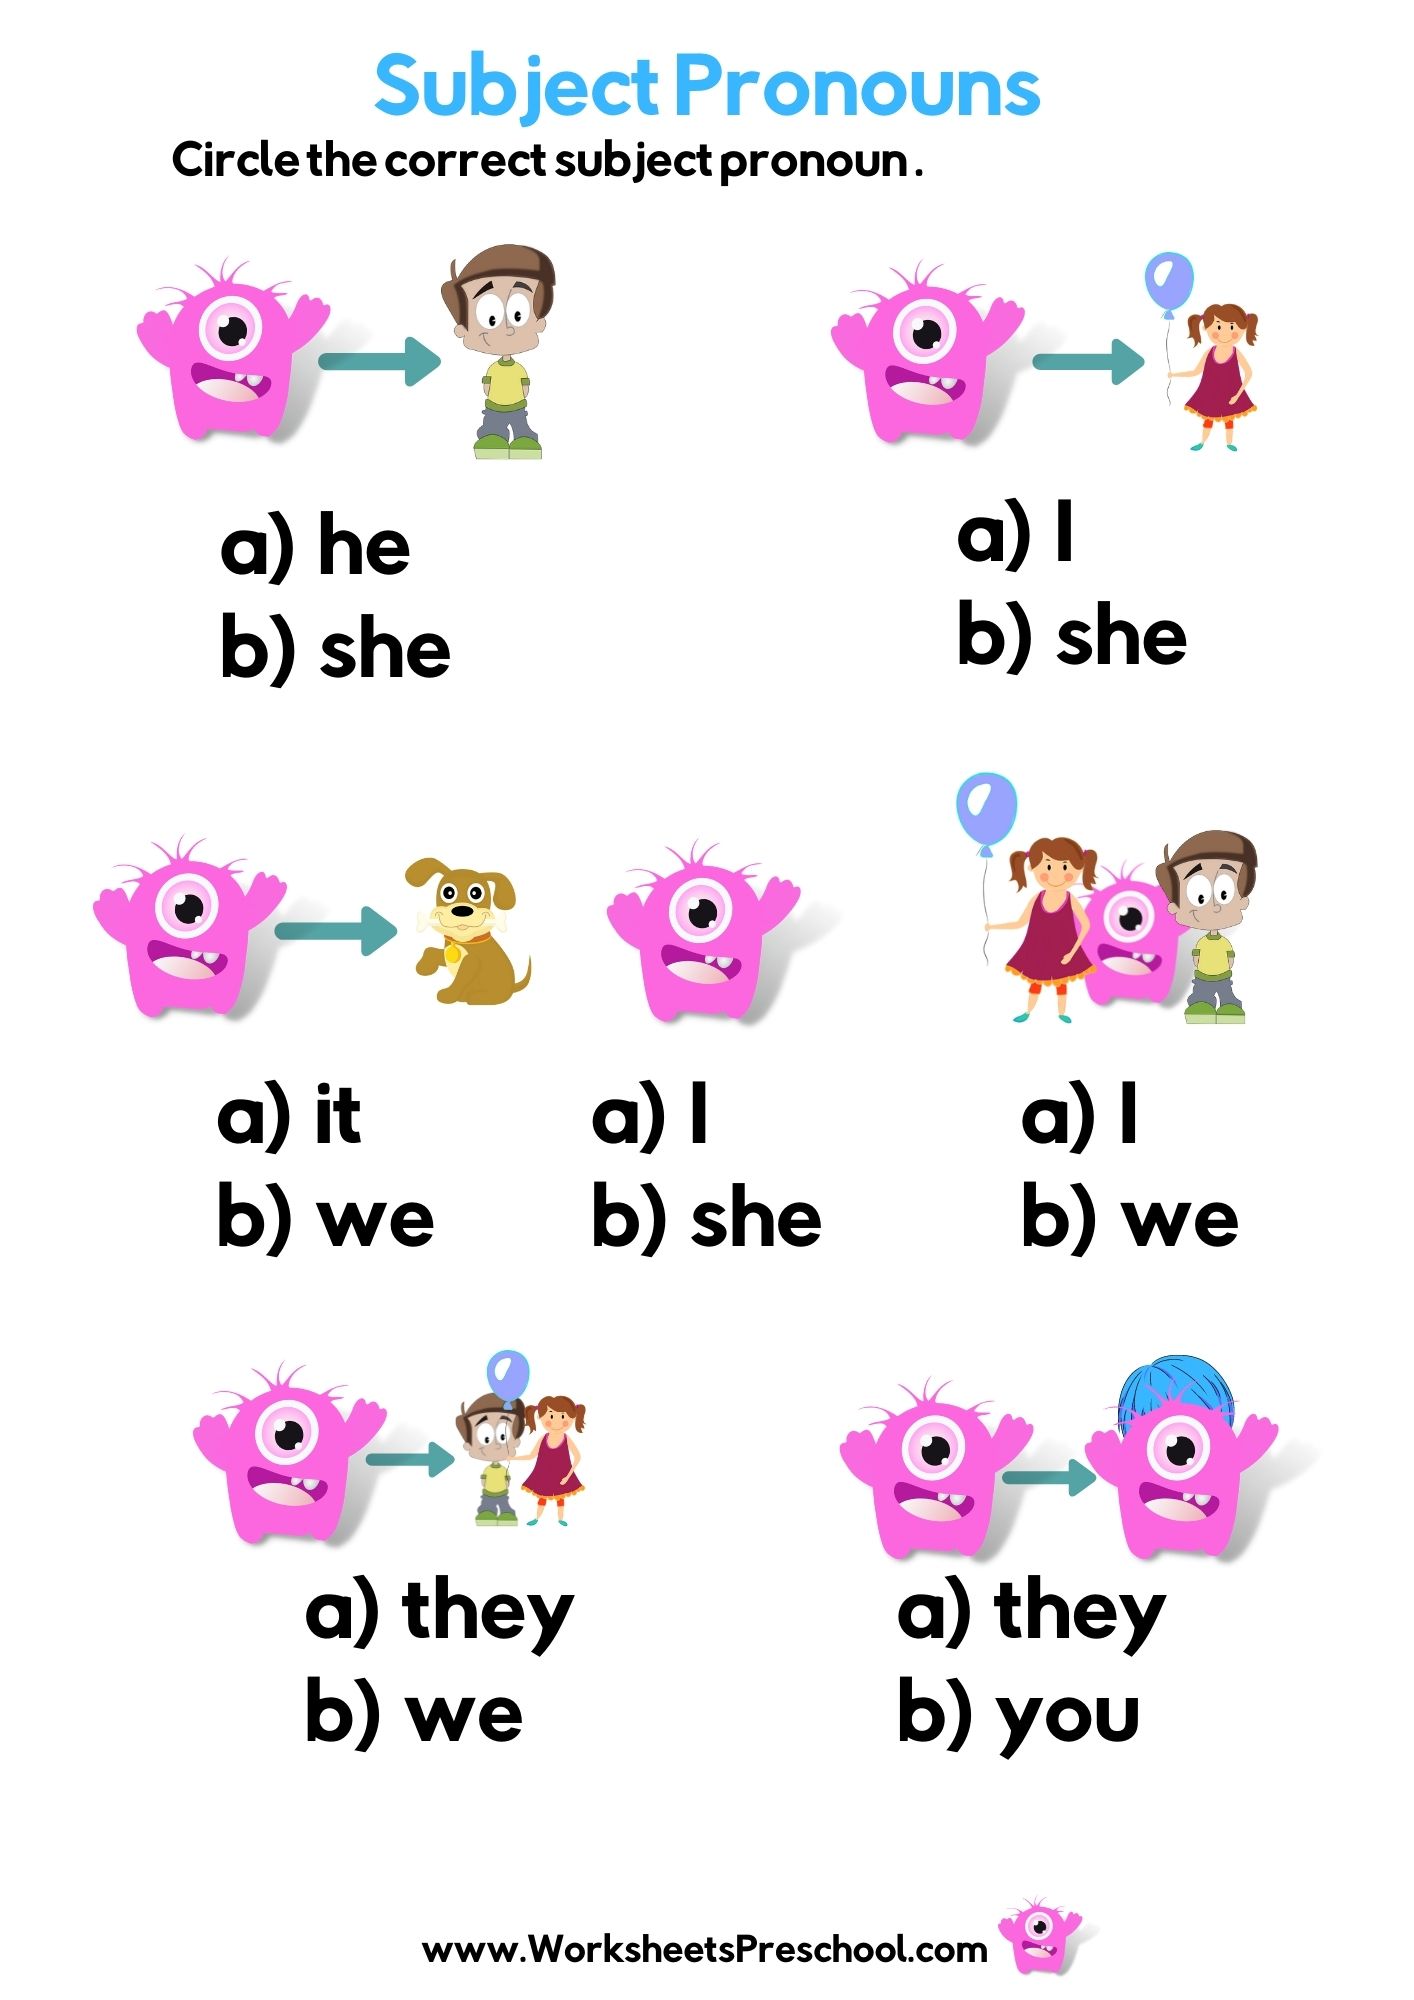 pronoun-worksheets-pdf-6-free-printables-for-preschoolers